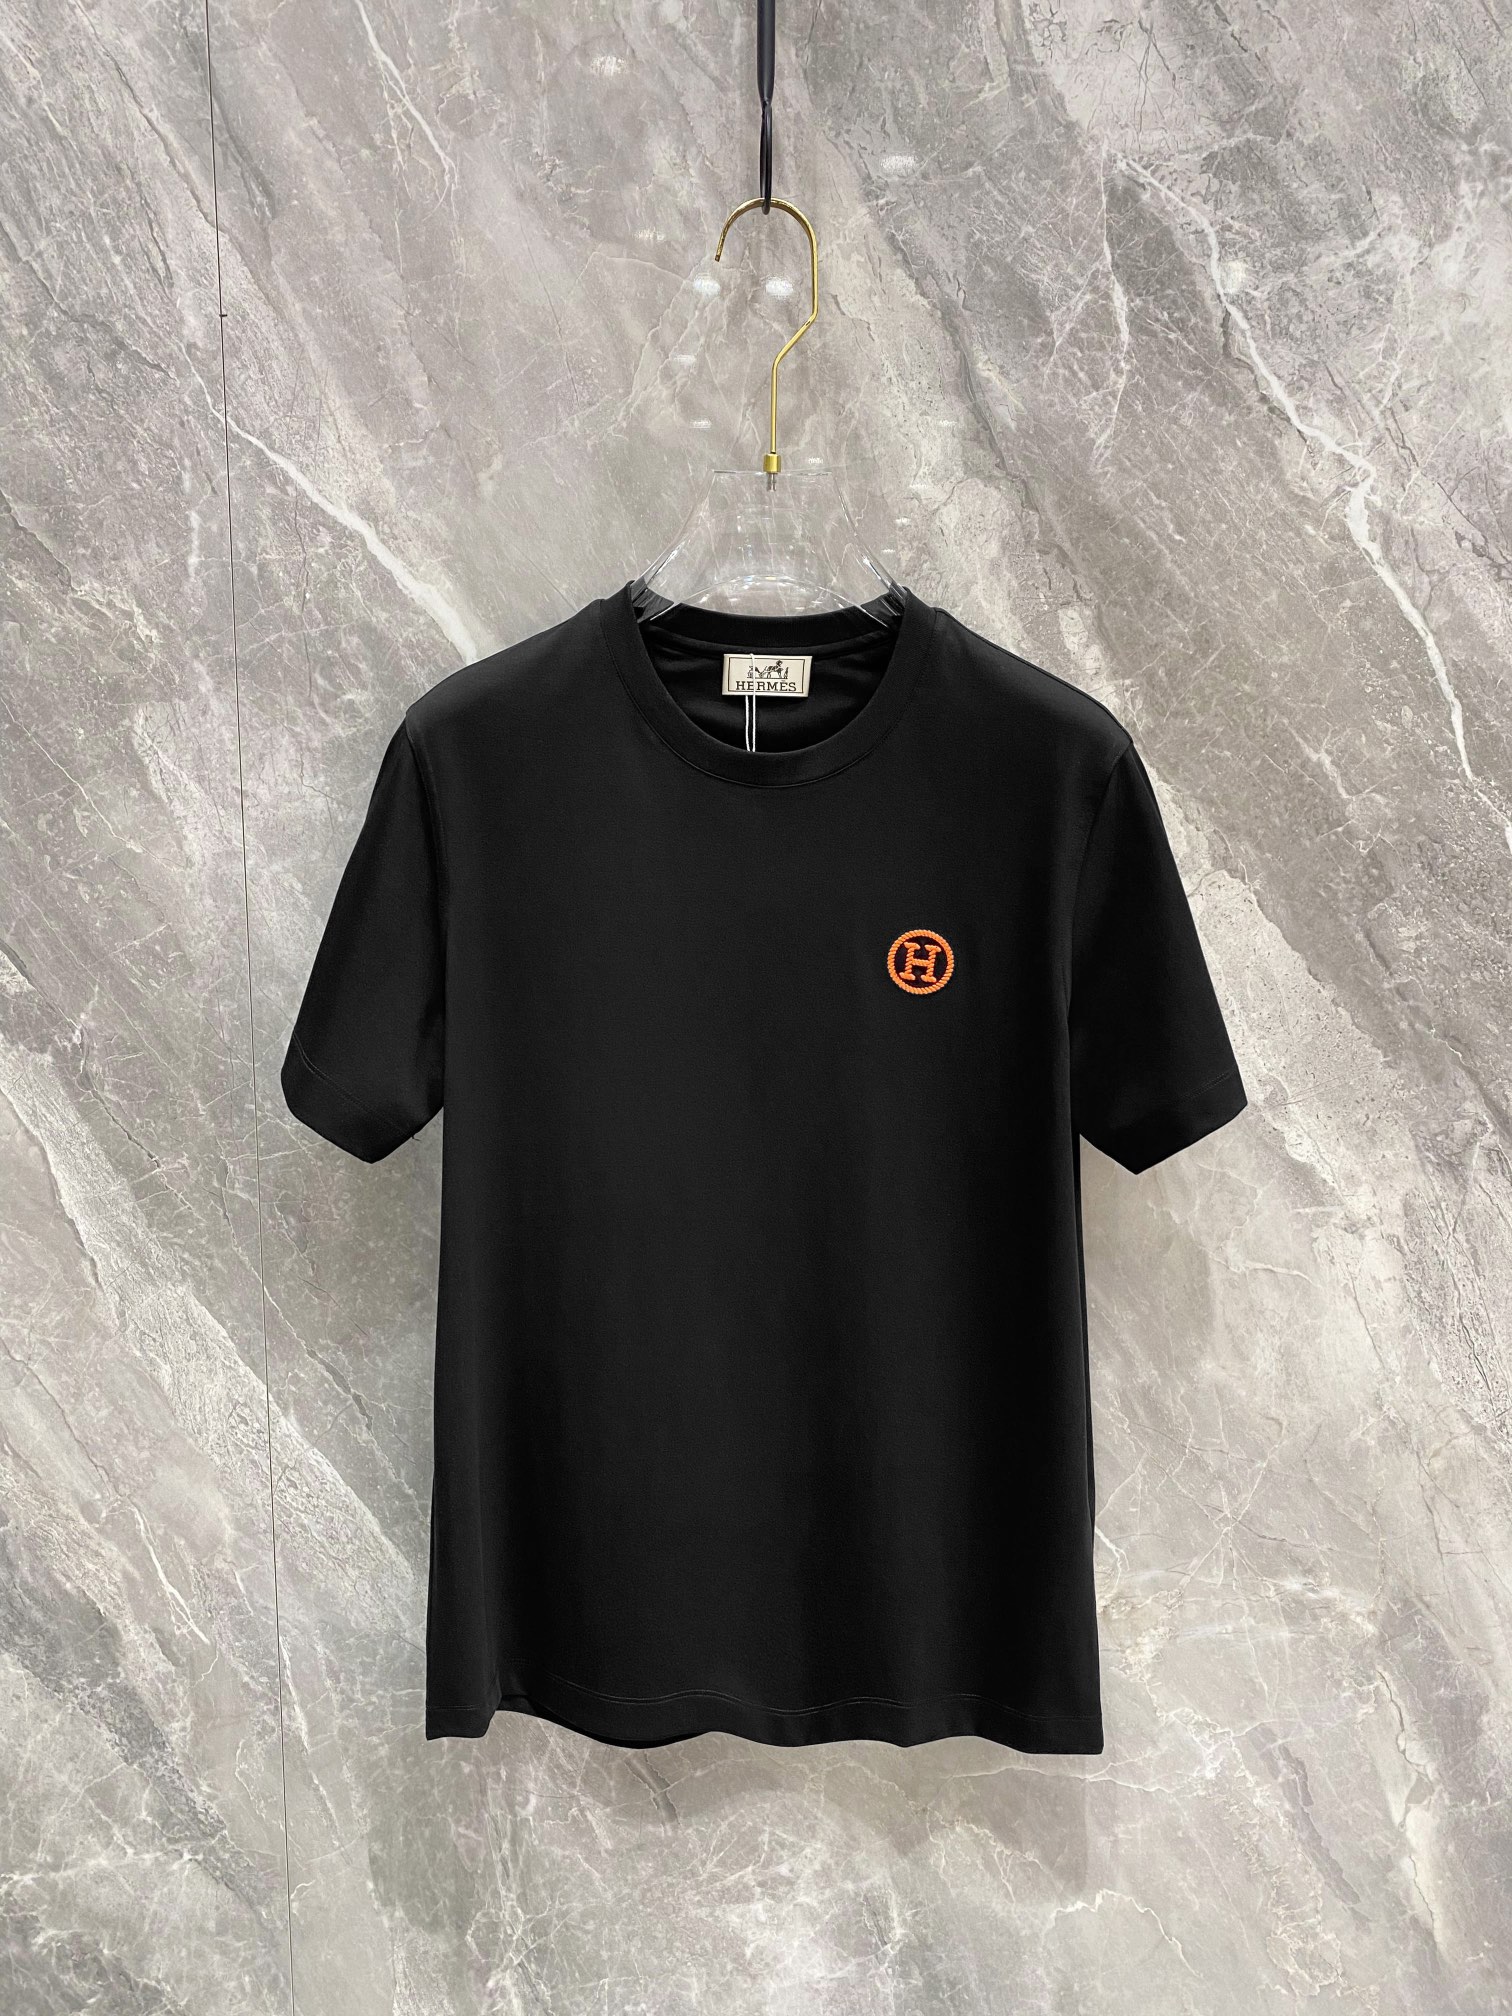 Replica Online
 Hermes Clothing T-Shirt Unisex Cotton Short Sleeve